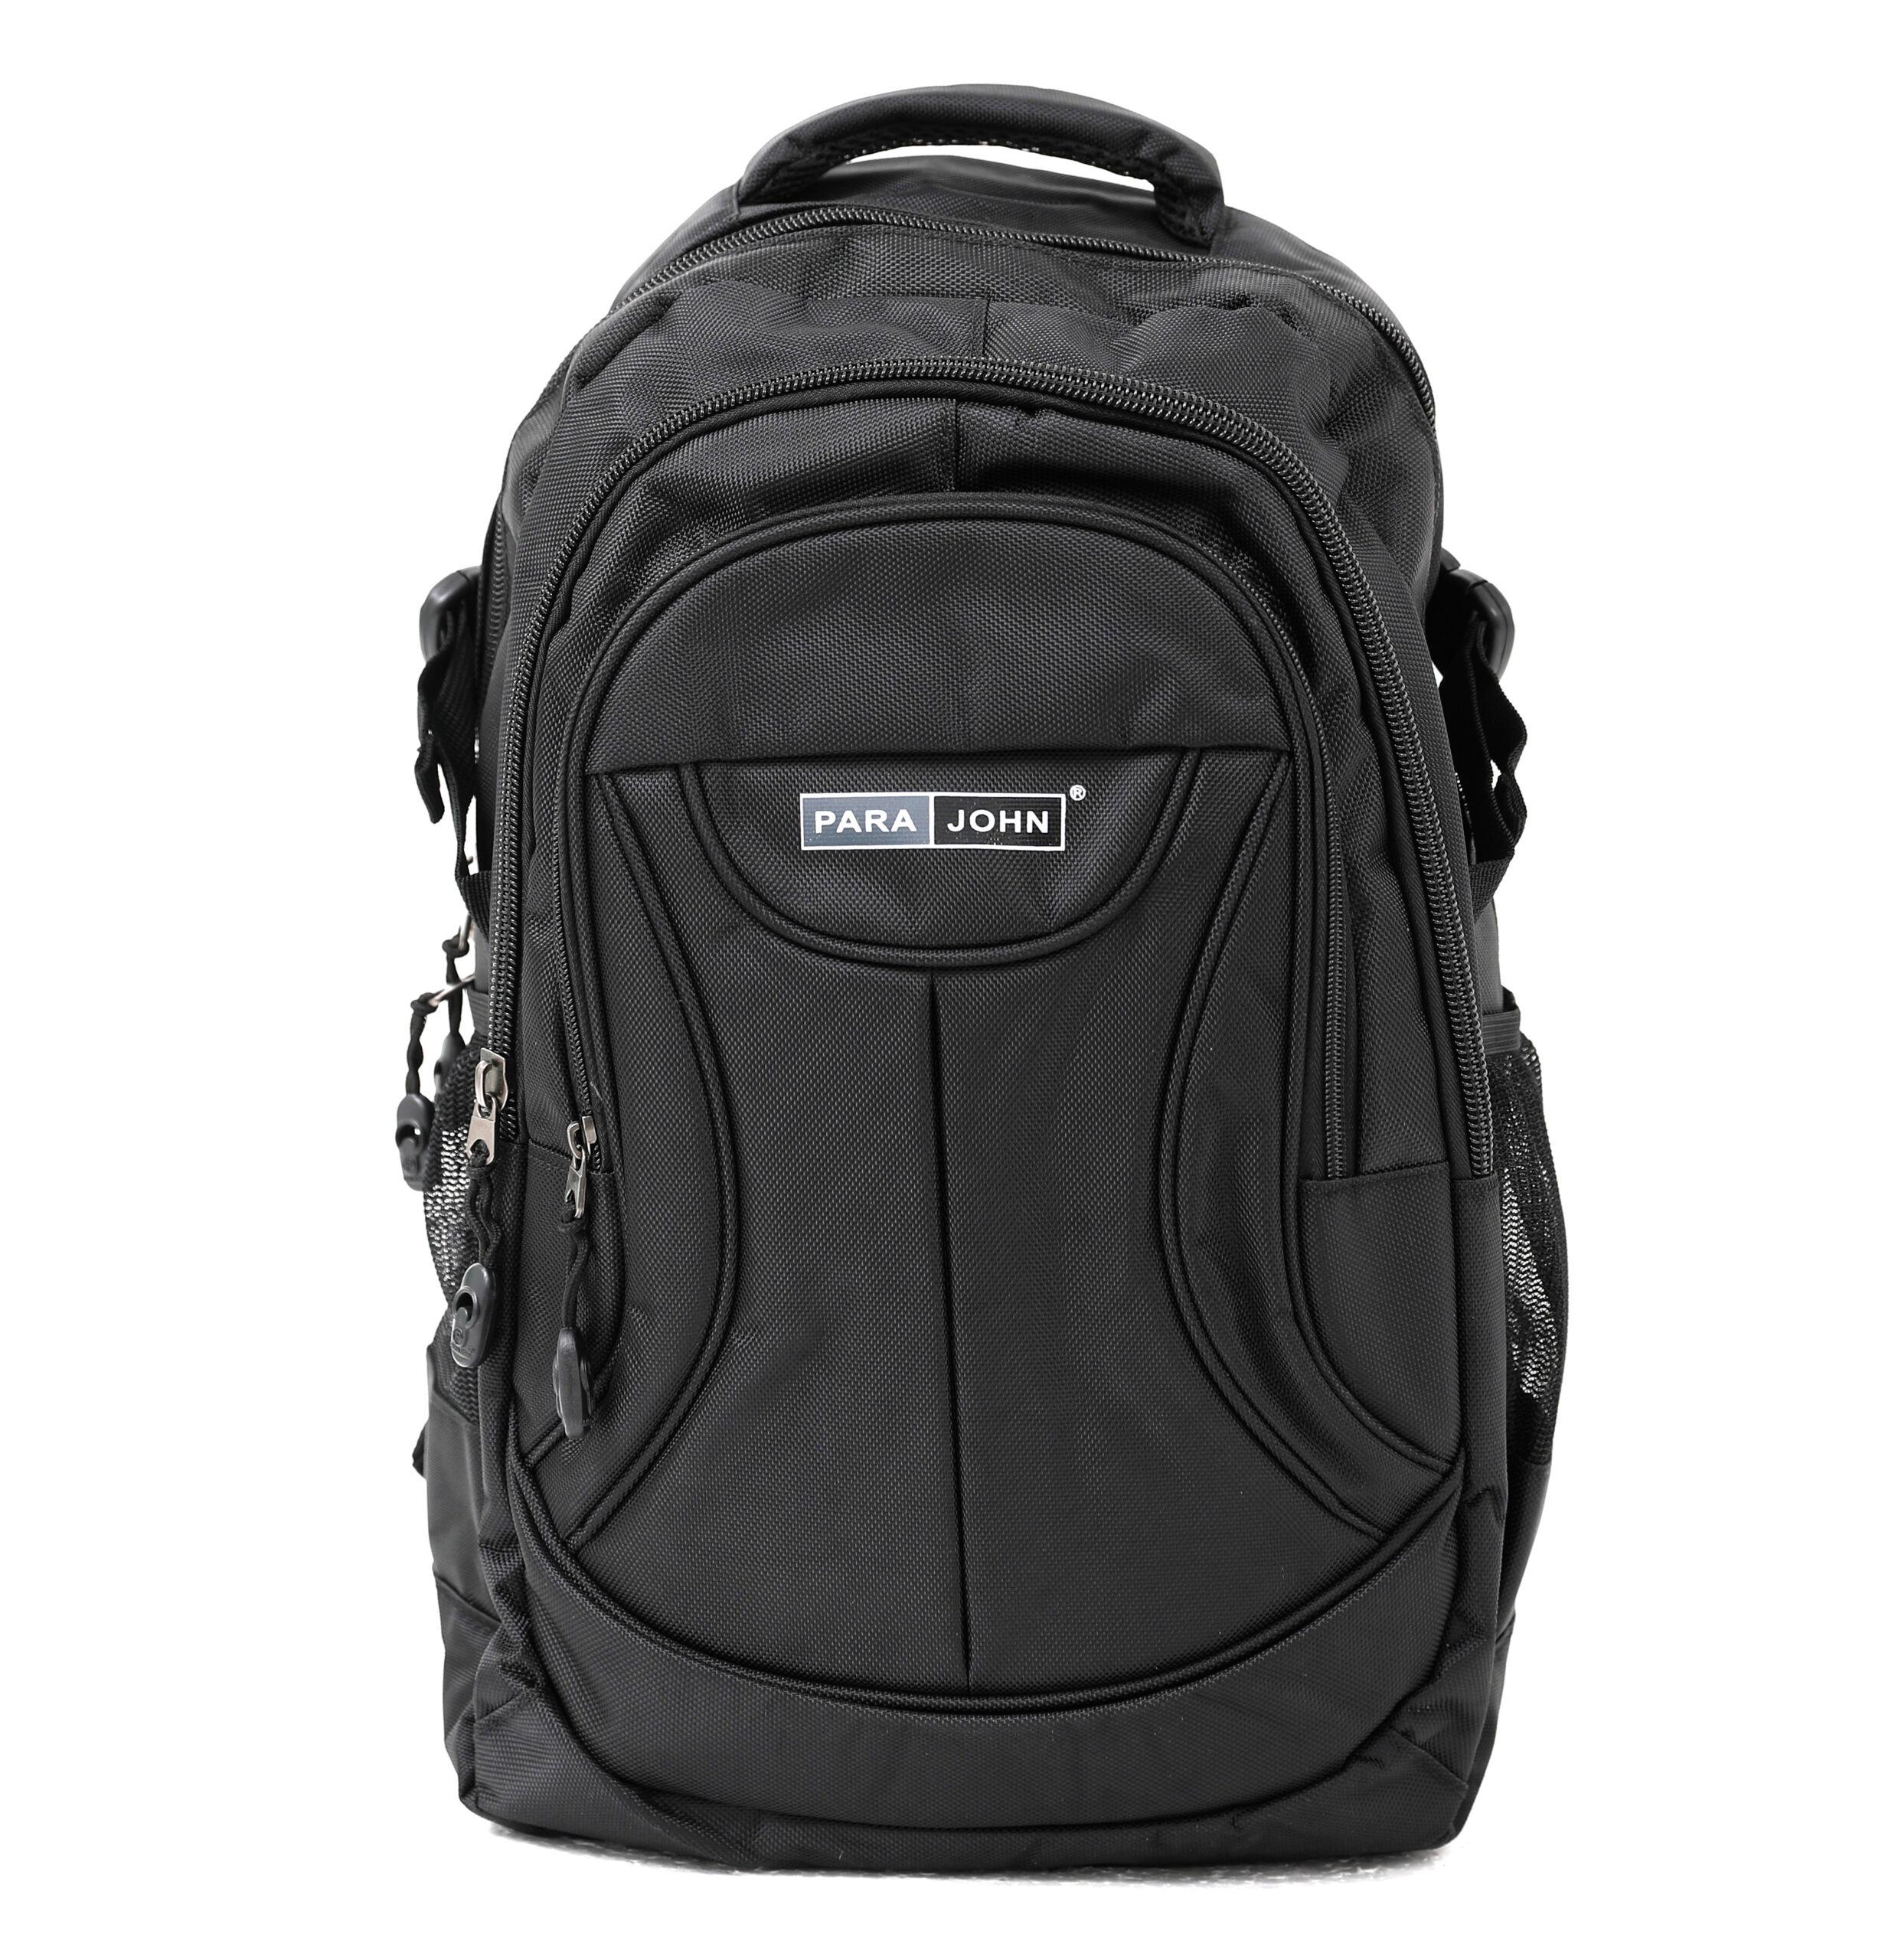 شنطة نايلون متعددة الإستخدامات قياس 16 إنش لون أسود Backpack 16''- Unisex Adults' Backpack - Multi-functional - PARA JOHN